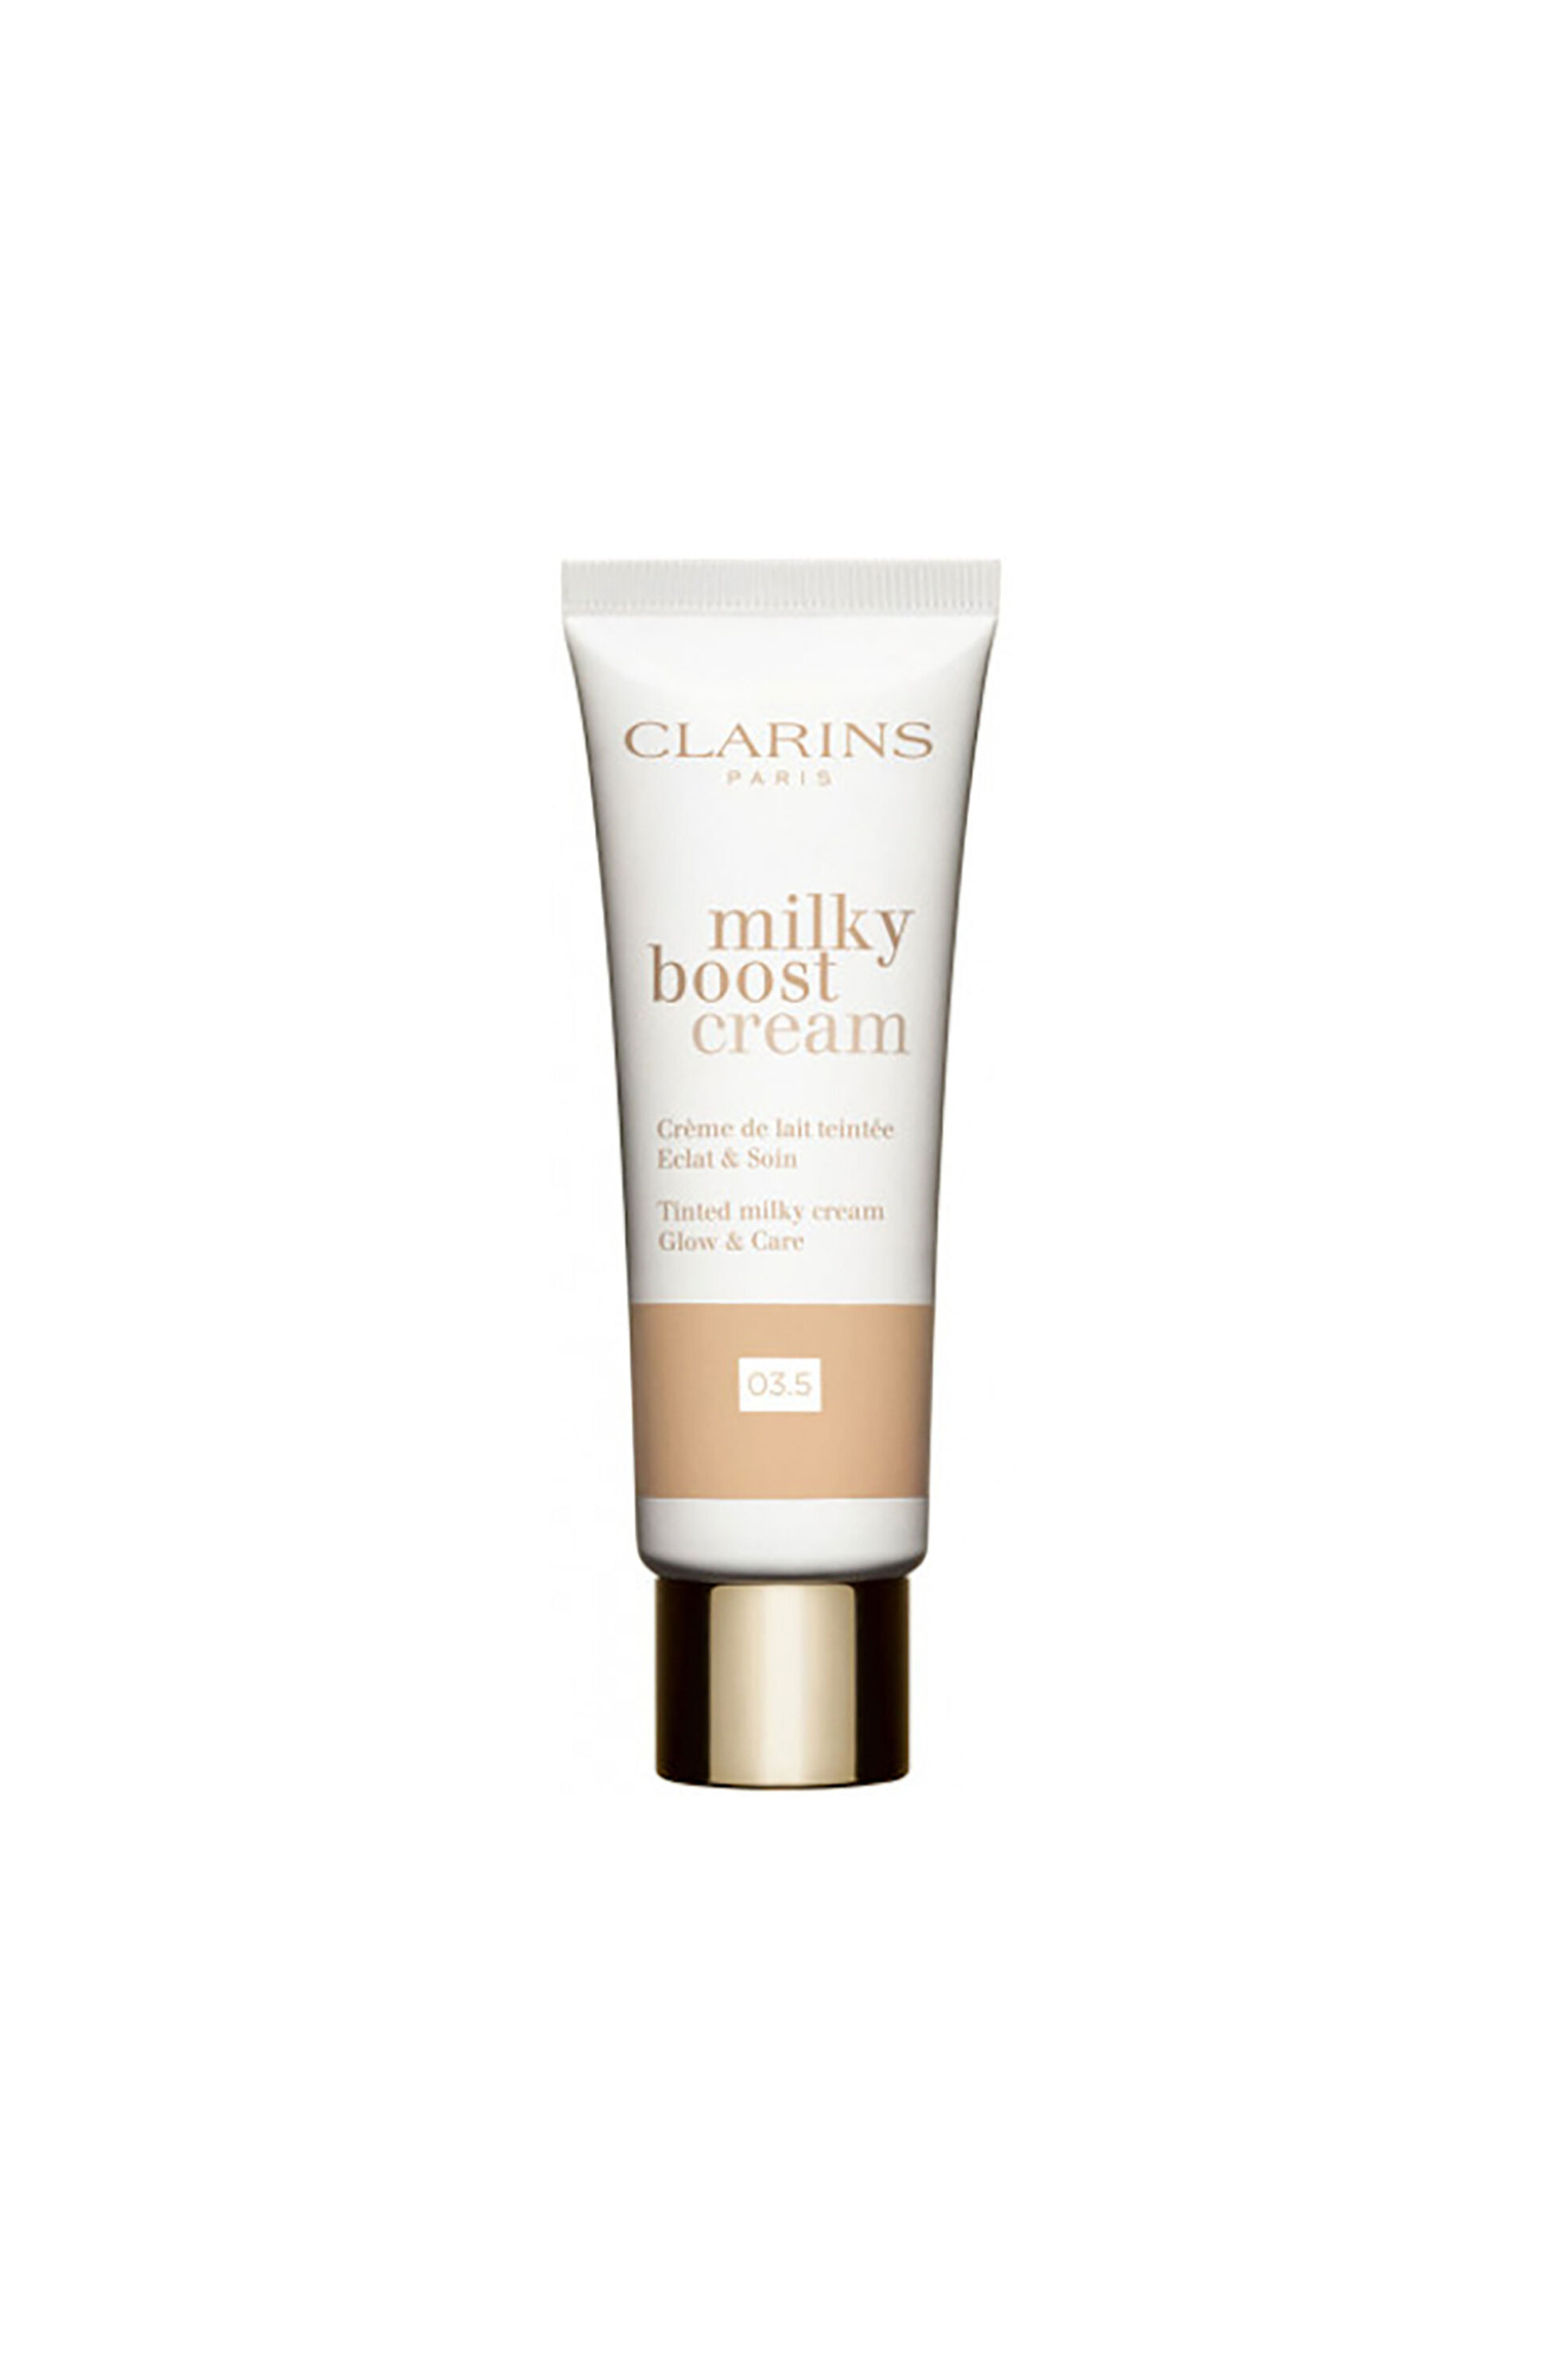 Clarins Milky Boost Cream - 80076085 03.5 Honey 1059598